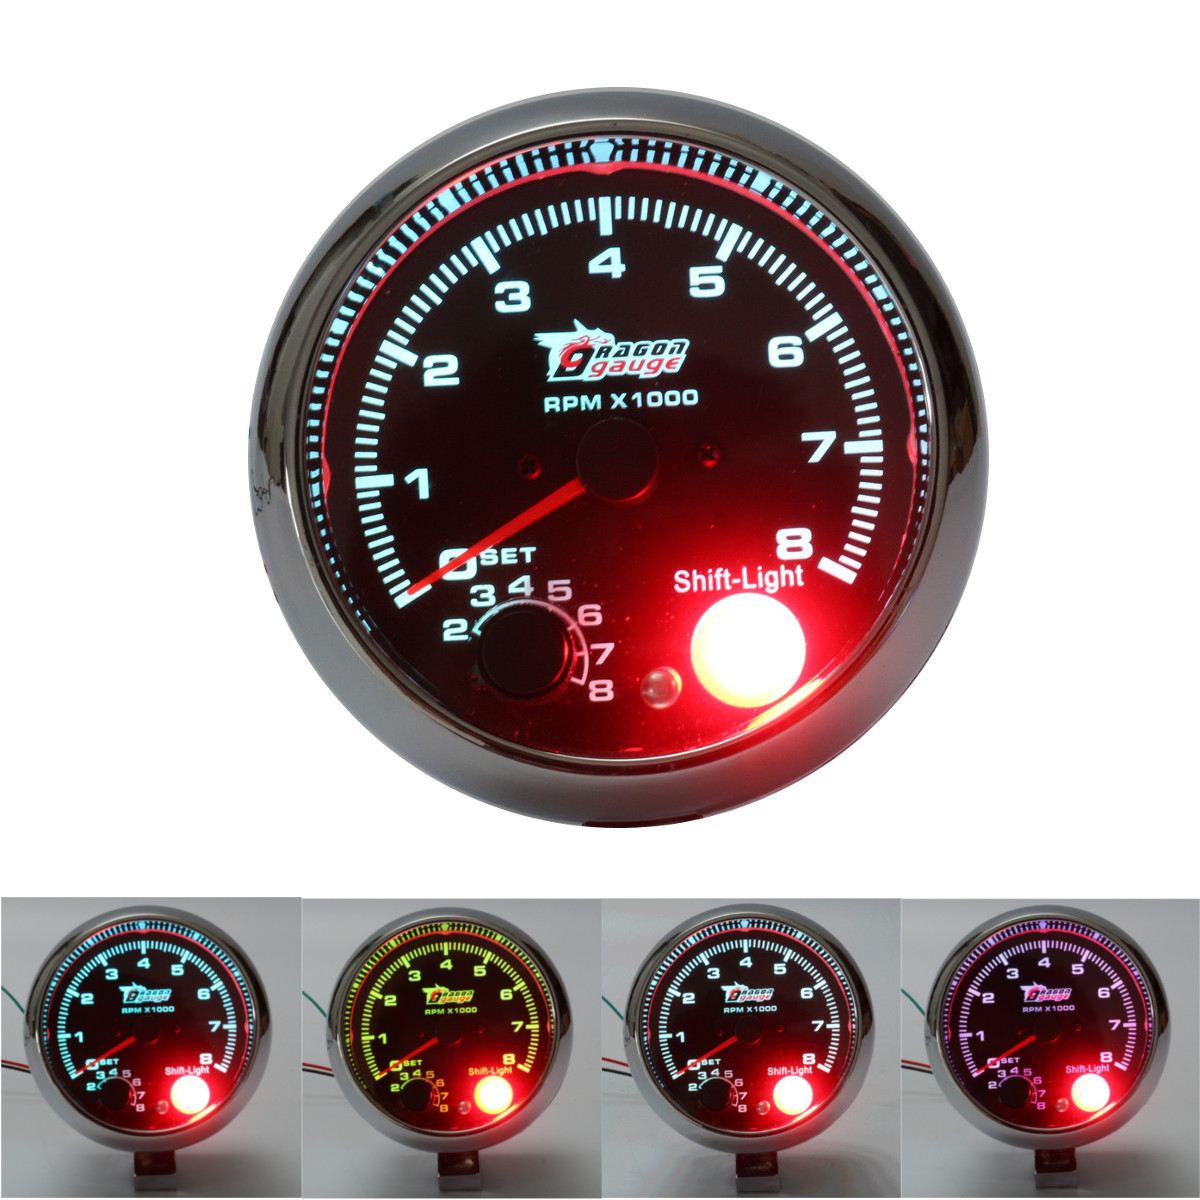 375-Inch-12V-RPMx1000-Tacho-Tachometer-with-Shift-Light-RPM-Rev-Gauge-Meter-1651166-4